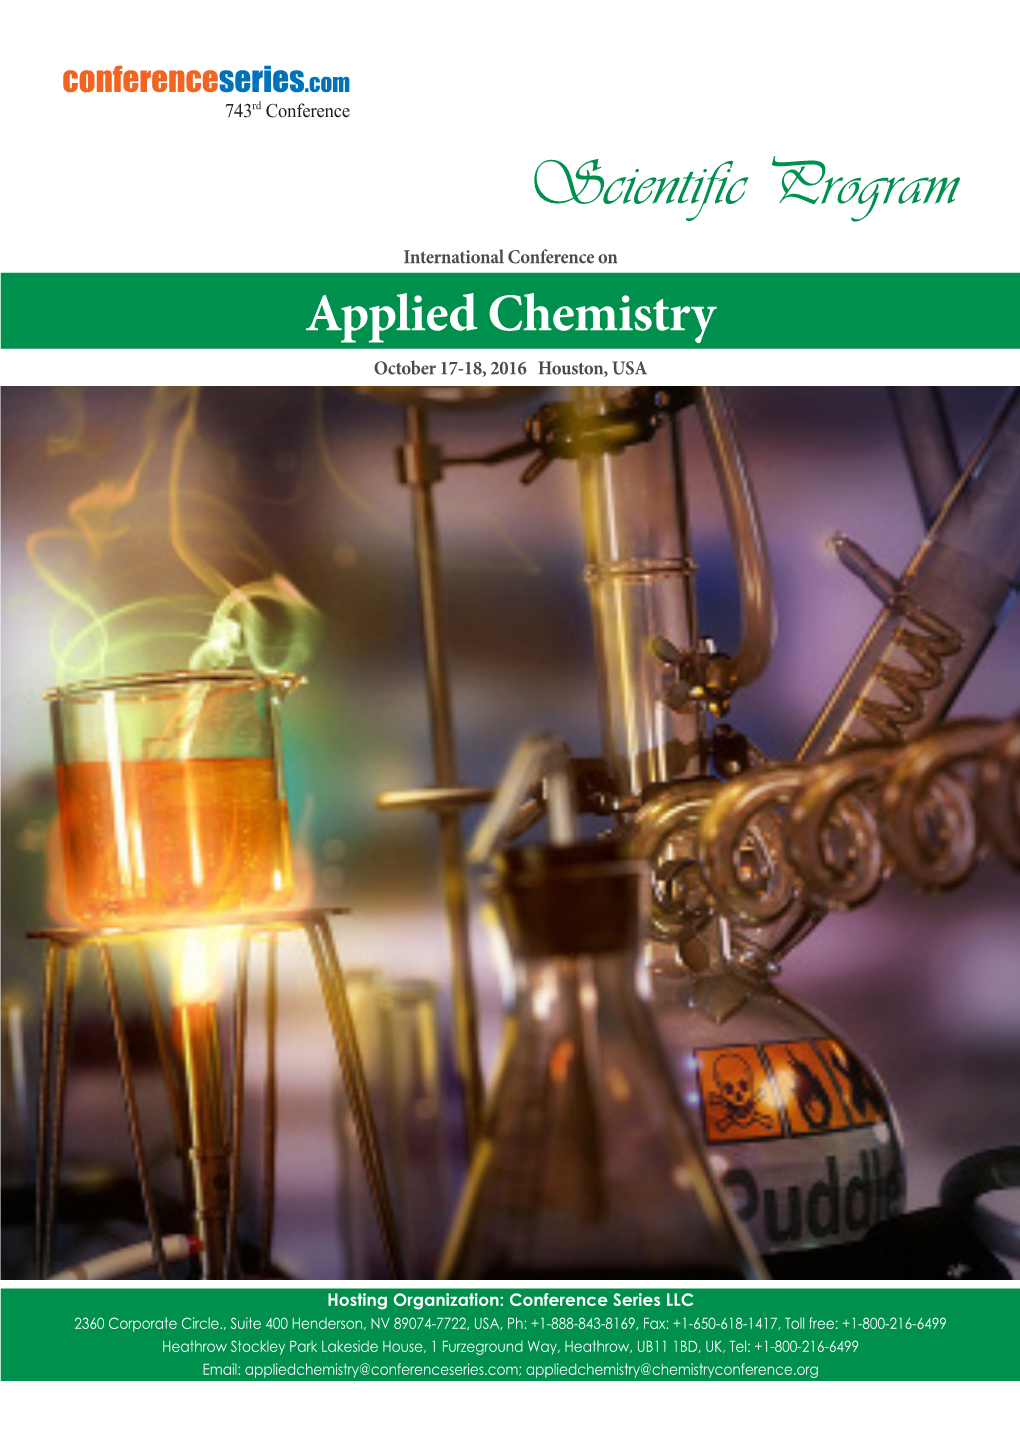 Applied-Chemistry-2016-9134-Scientific-Program.Pdf